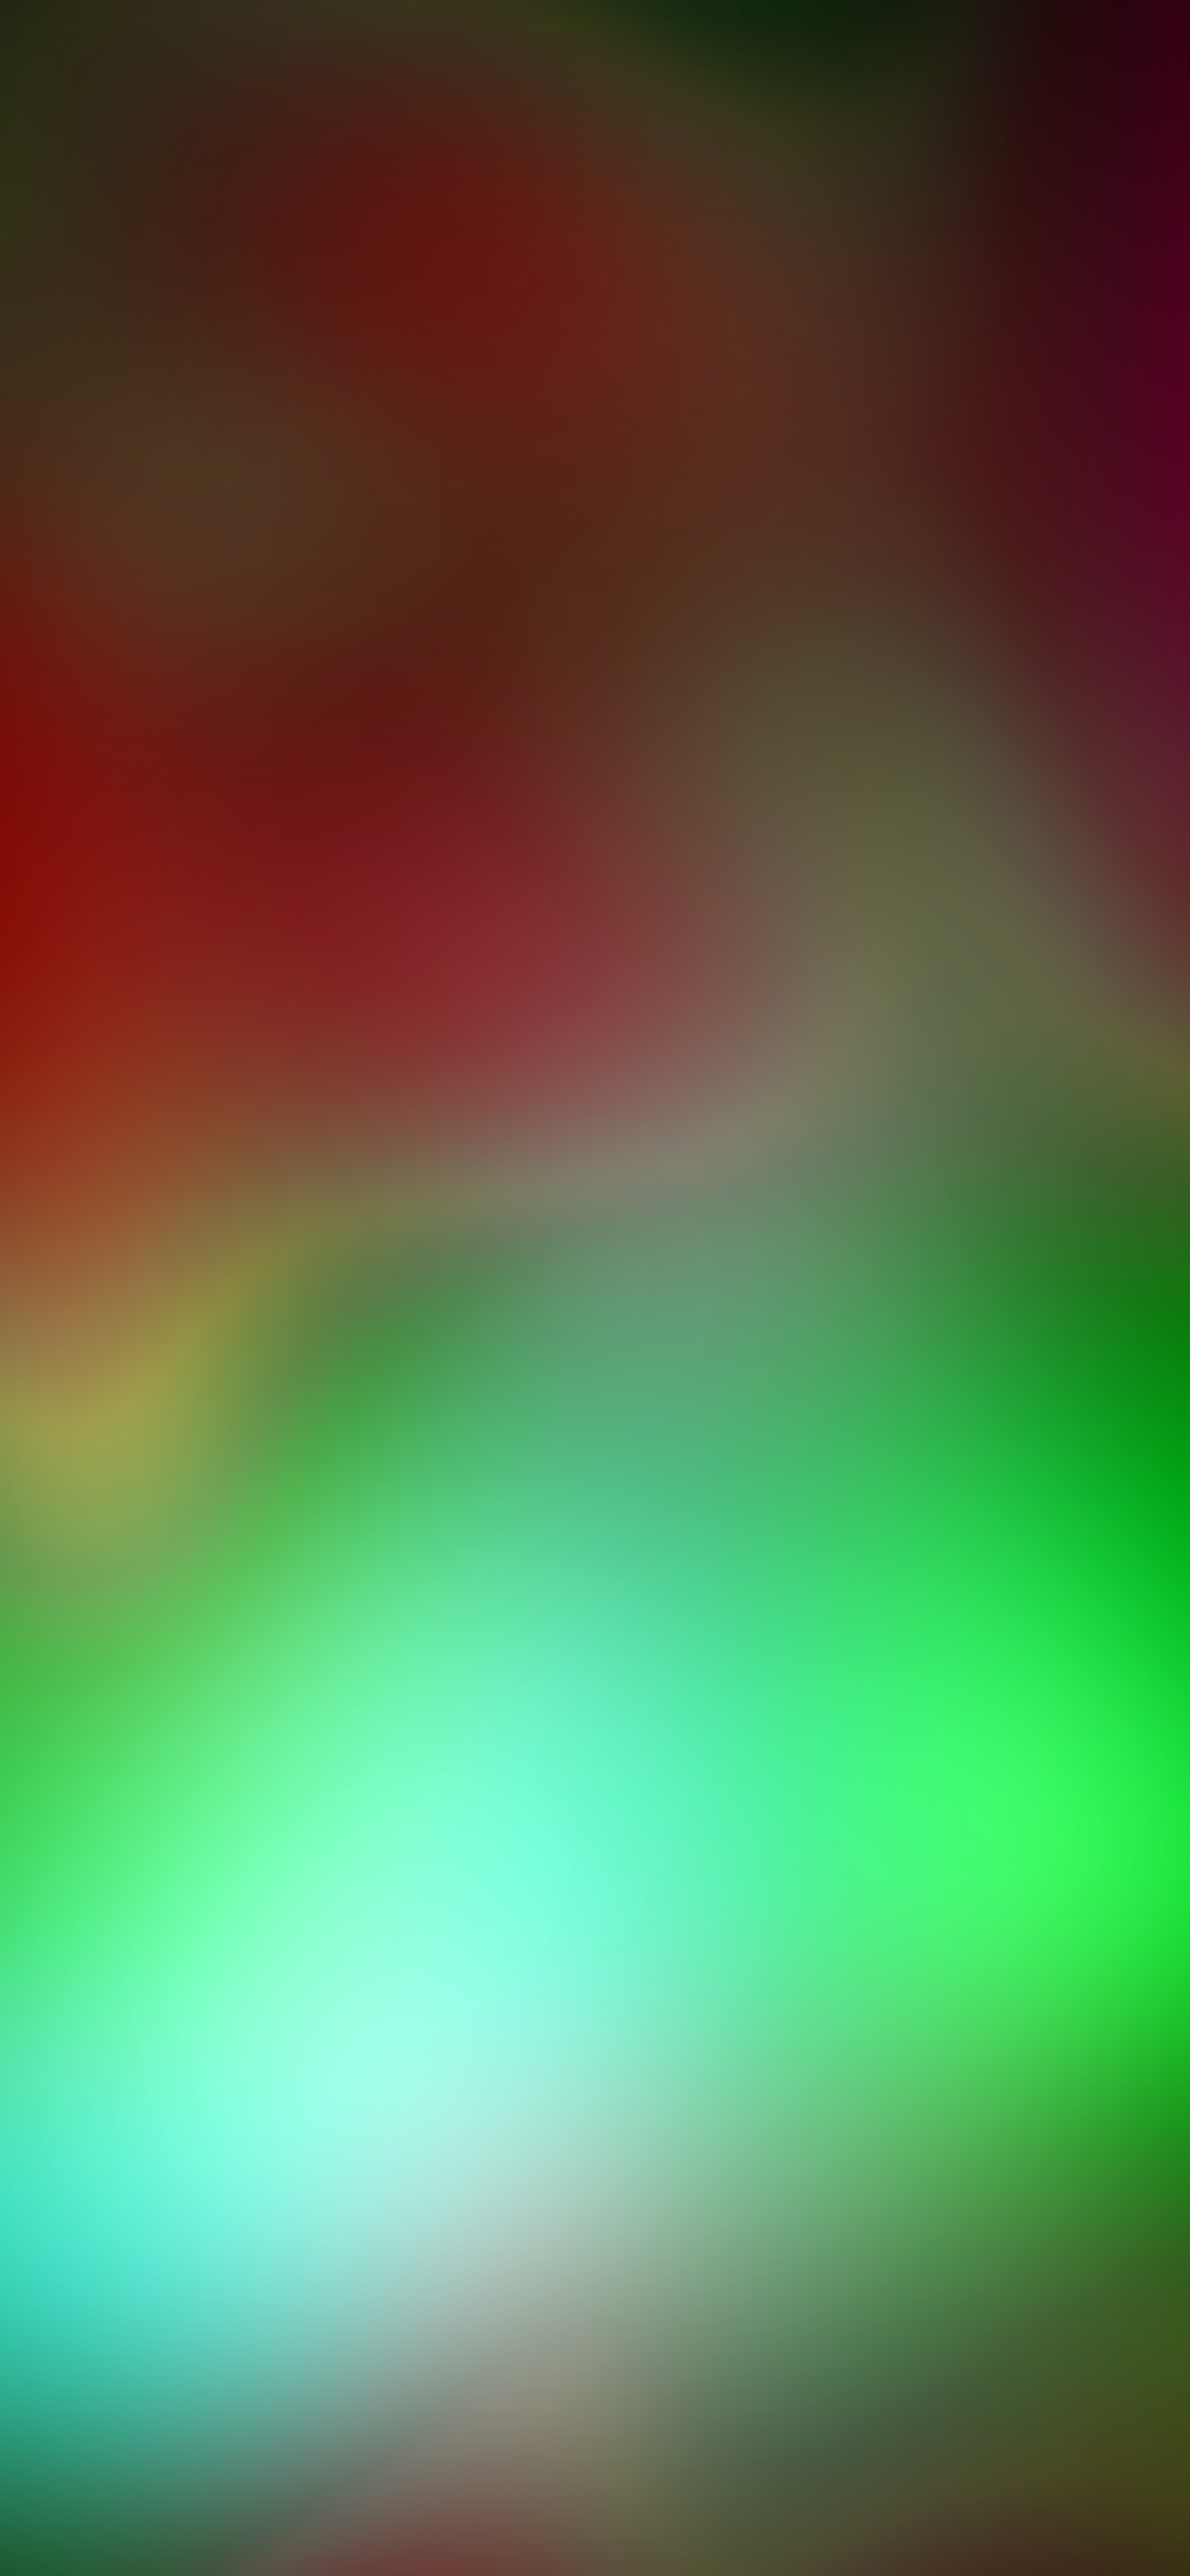 General 2250x4872 iPod iPhone iPad iOS colorful portrait display